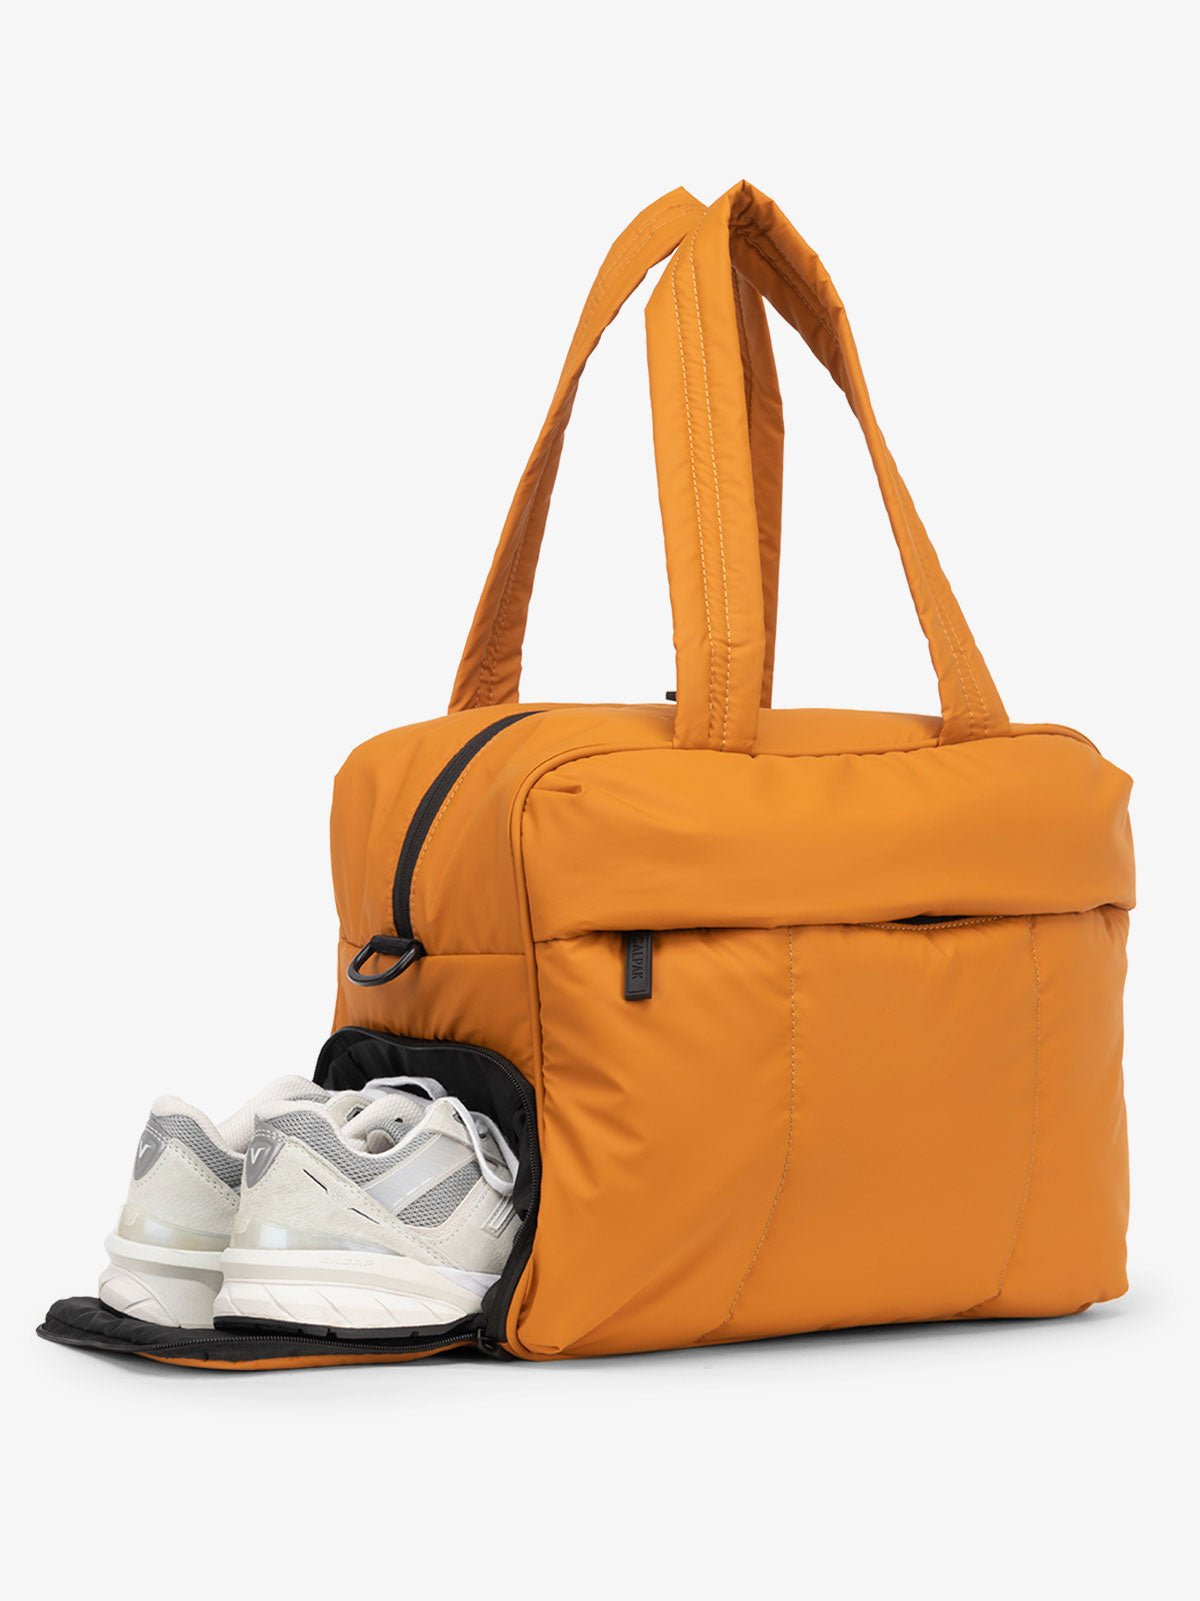 CALPAK Luka Duffel Bag shoe compartment in pumpkin